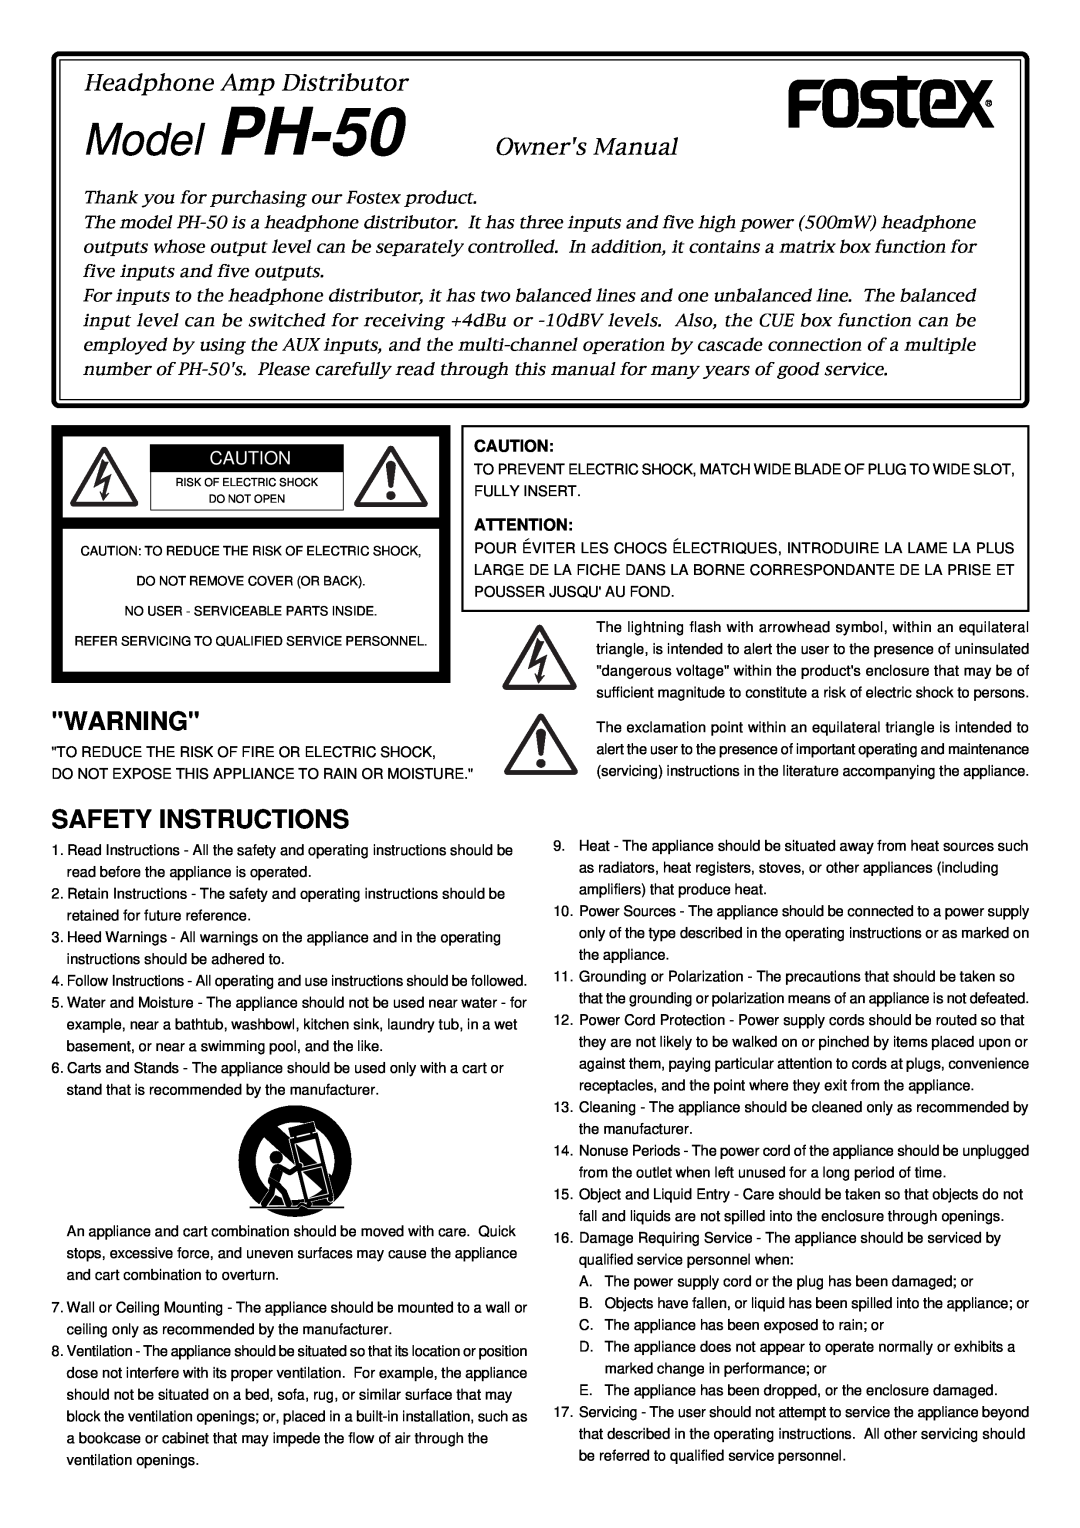 Fostex user service Safety Instructions, Model PH-50, Headphone Amp Distributor 